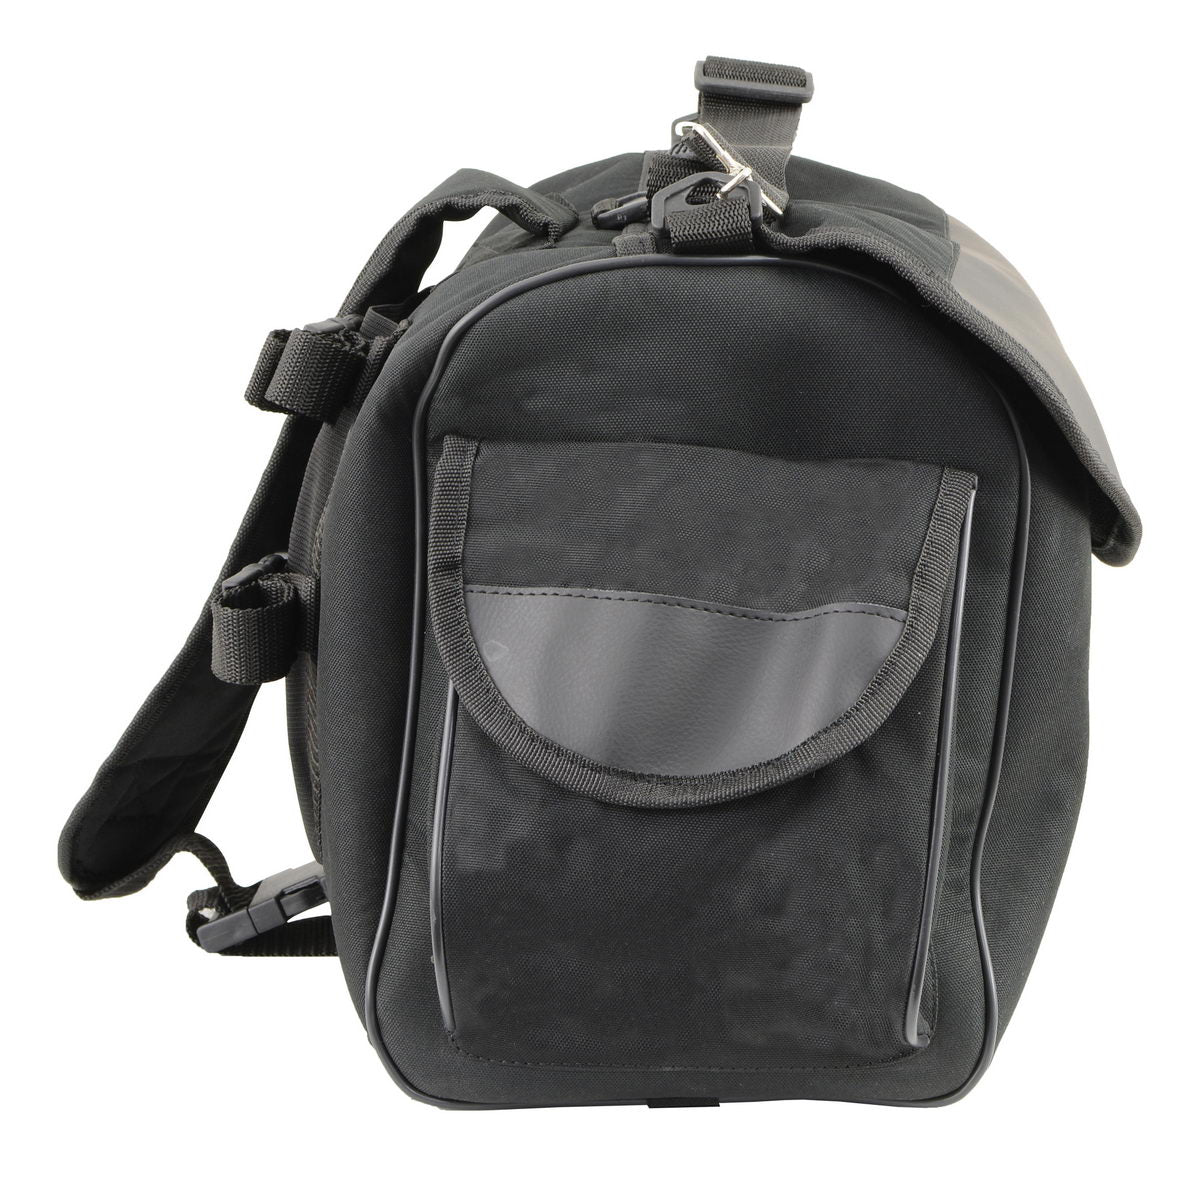 Milwaukee Leather SH630 Medium Black Textile Motorcycle Sissy Bar Duffle Bag